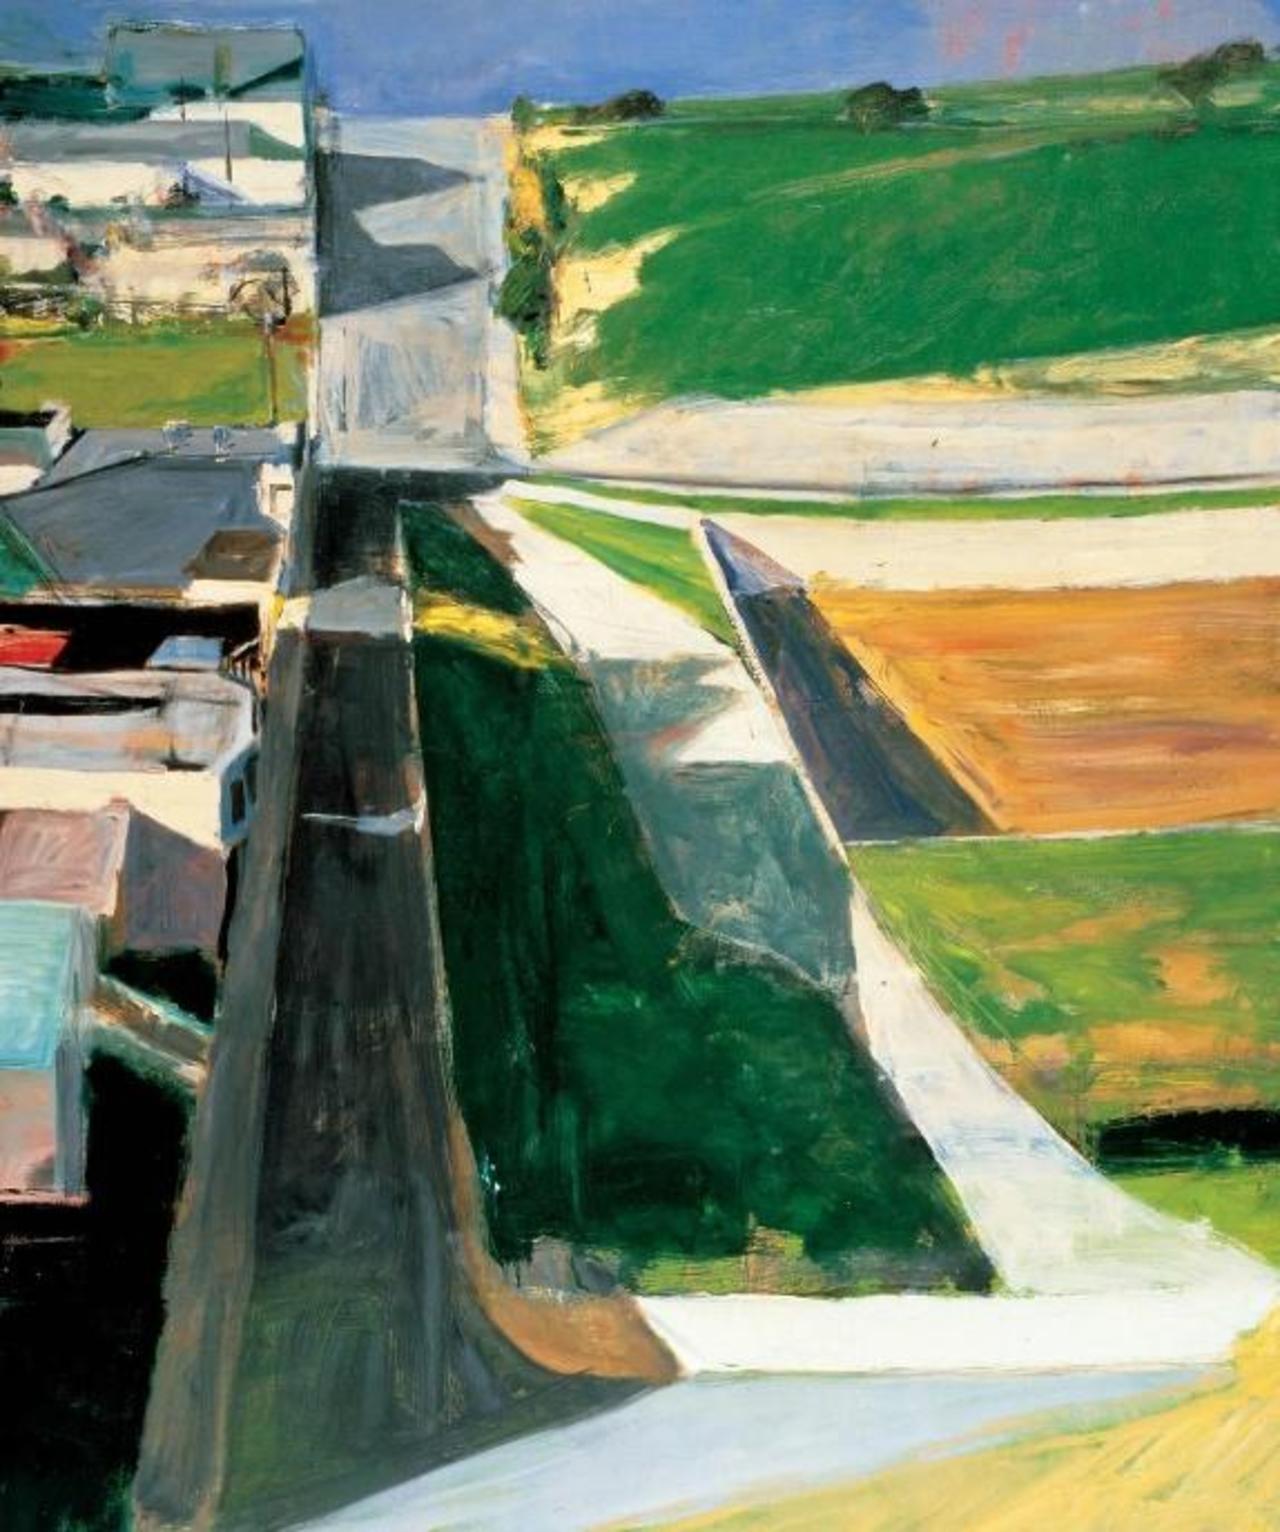 “@marisabeloyo: Richard Diebenkorn
'Cityscape I'    #Expressionism 
San Francisco Museum of Modern Art, USA http://t.co/CzzlnuHHVY”